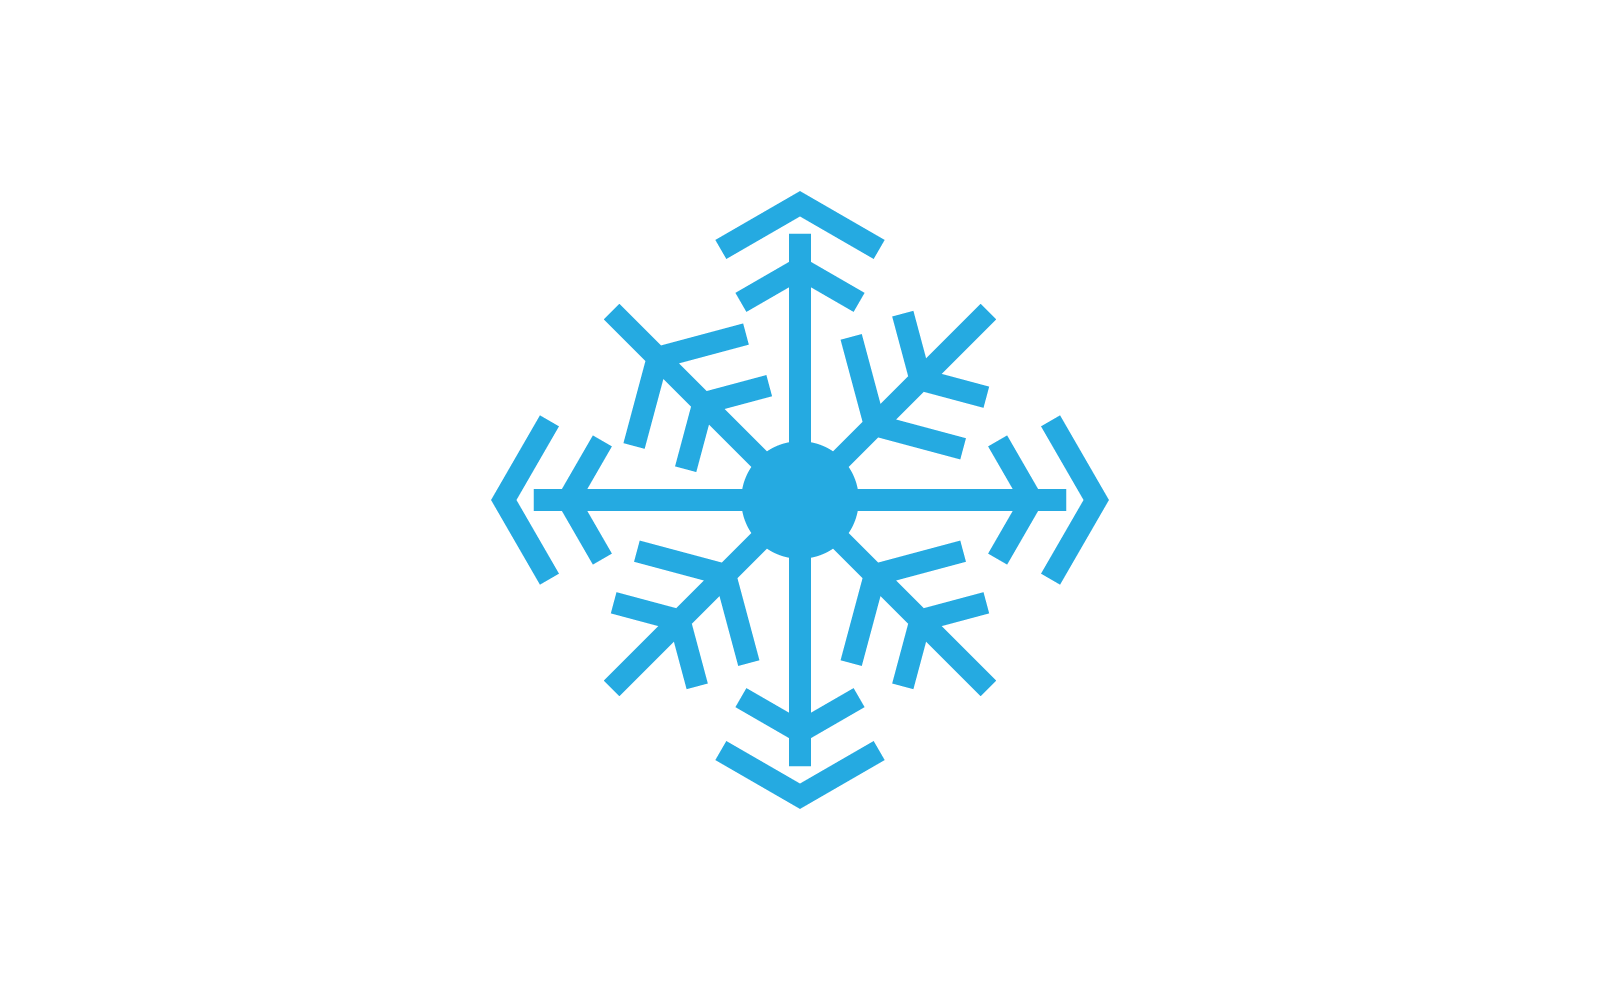 Snowflakes icon, symbol ilustration vector flat design template